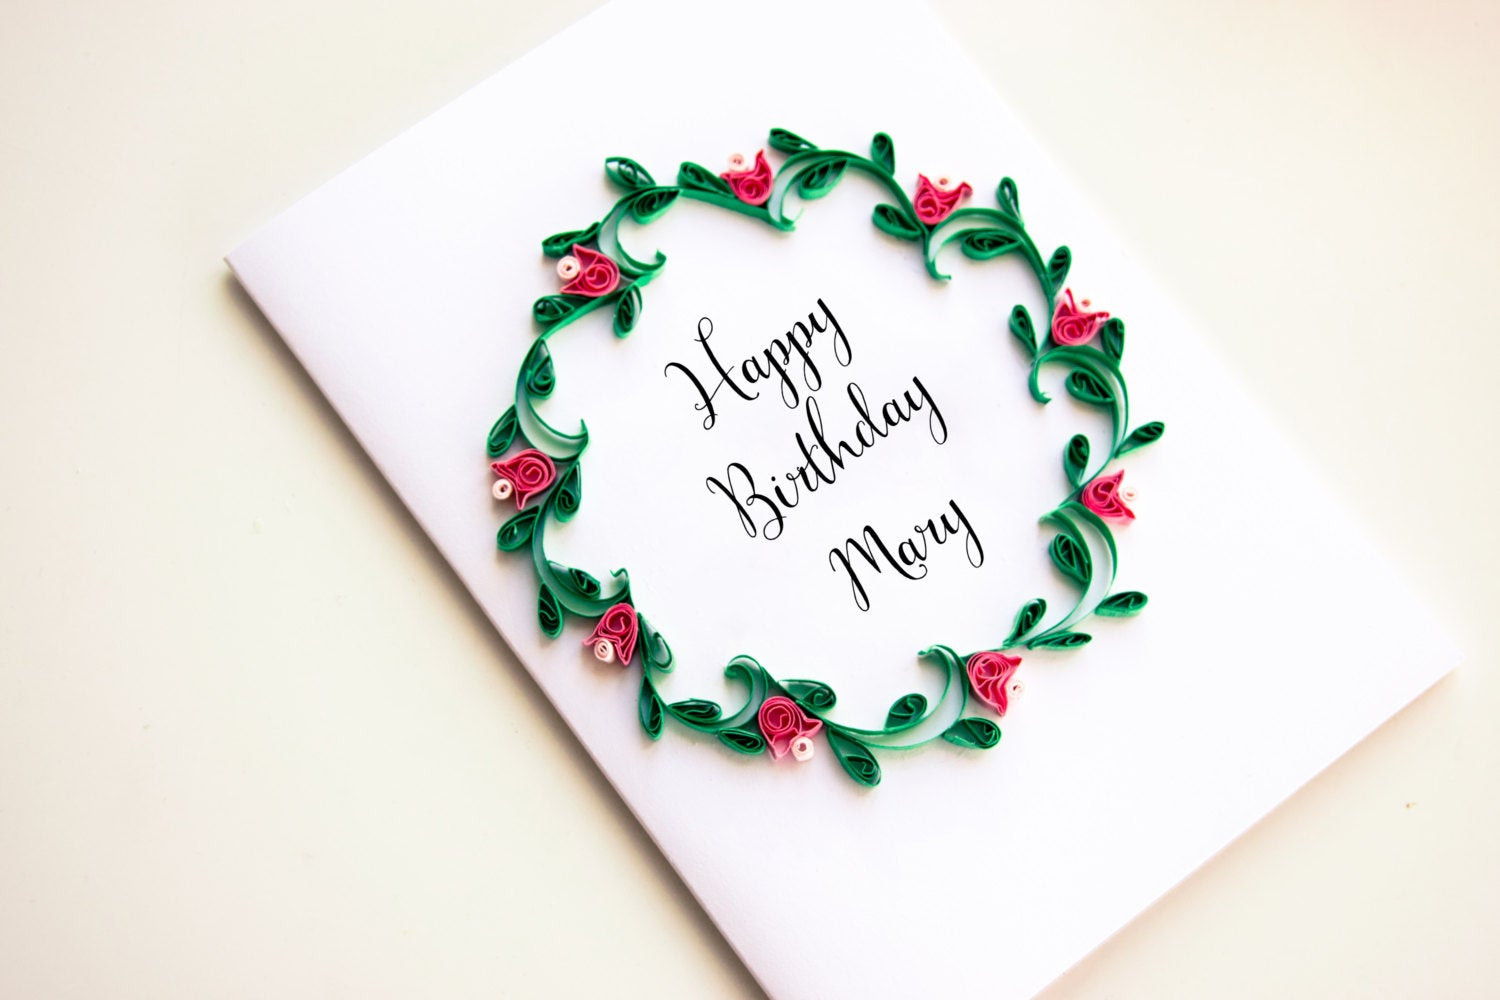 Best ideas about Custom Birthday Card
. Save or Pin Personalized Birthday Card Personalized Happy Birthday Card Now.